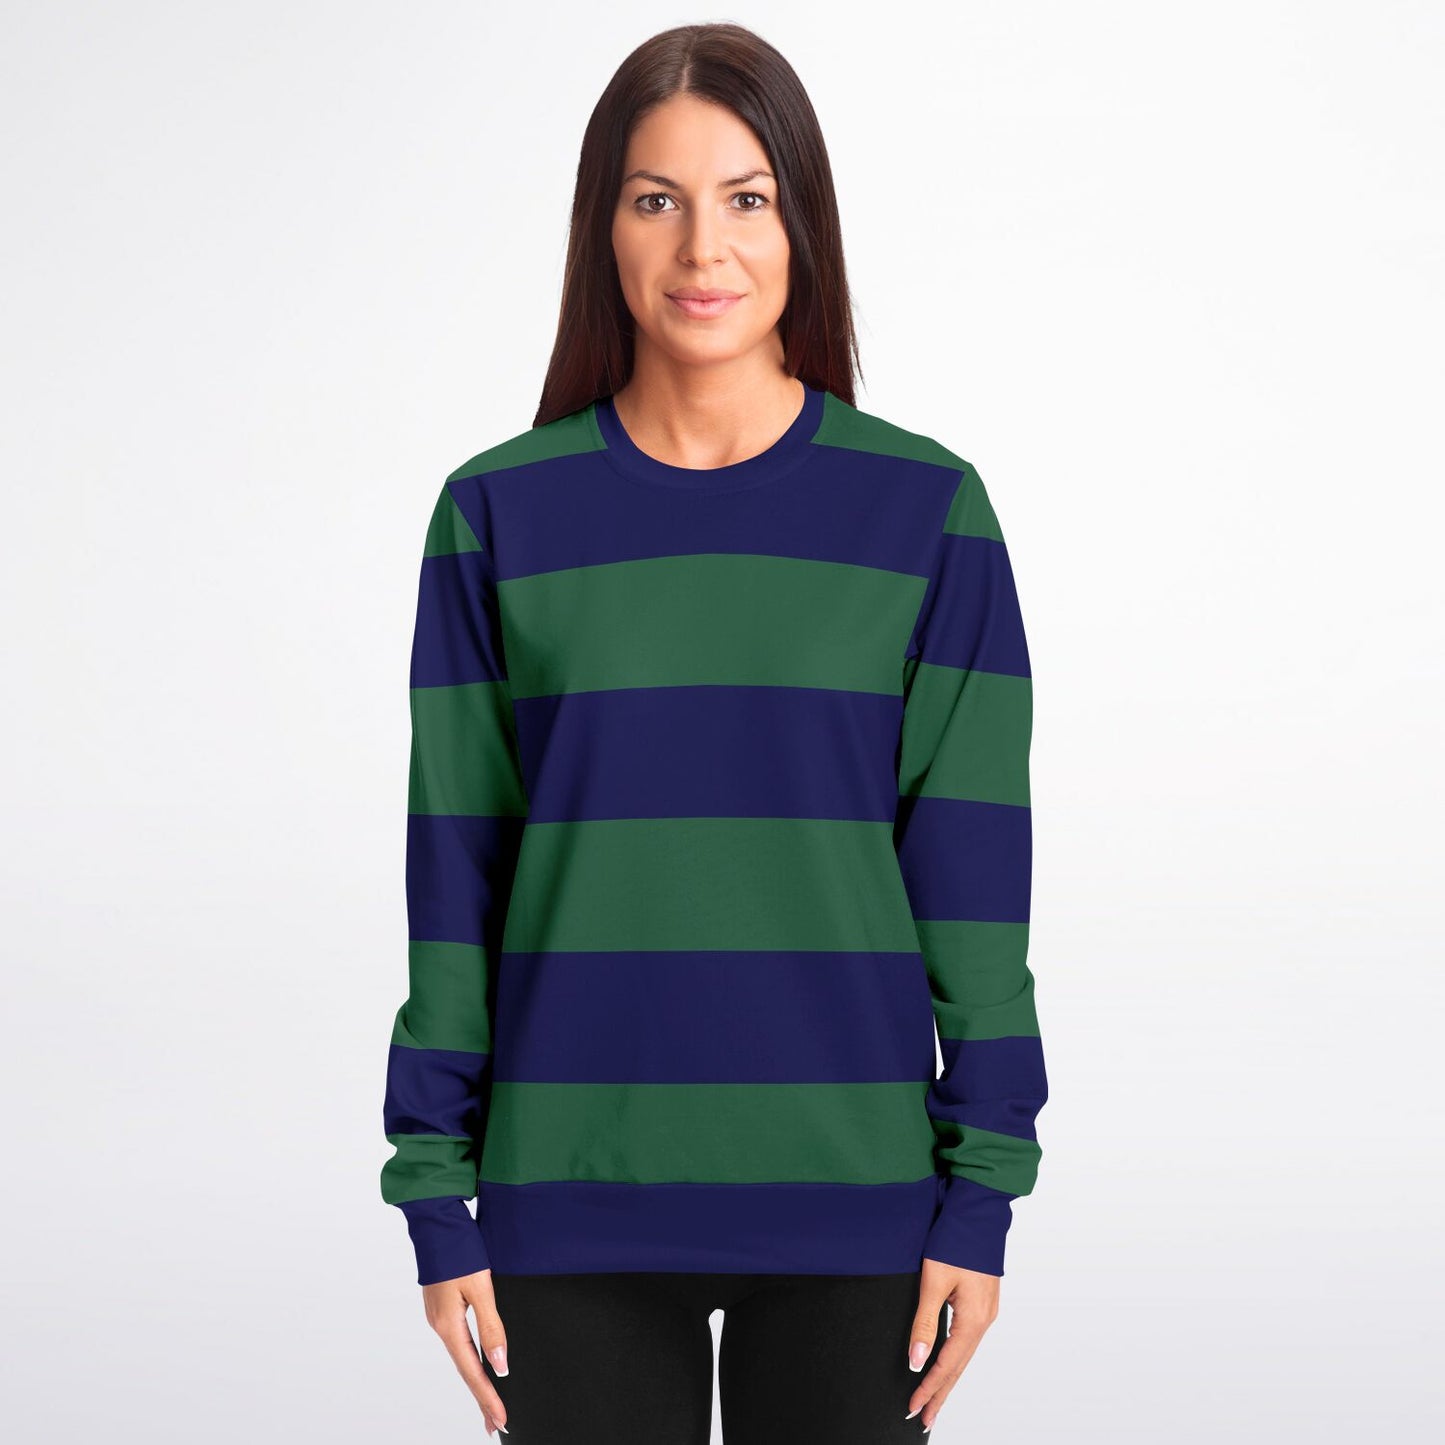 Blue Green Striped Sweatshirt, Retro Vintage Crewneck Fleece Cotton Sweater Jumper Pullover Men Women Adult Top Starcove Fashion